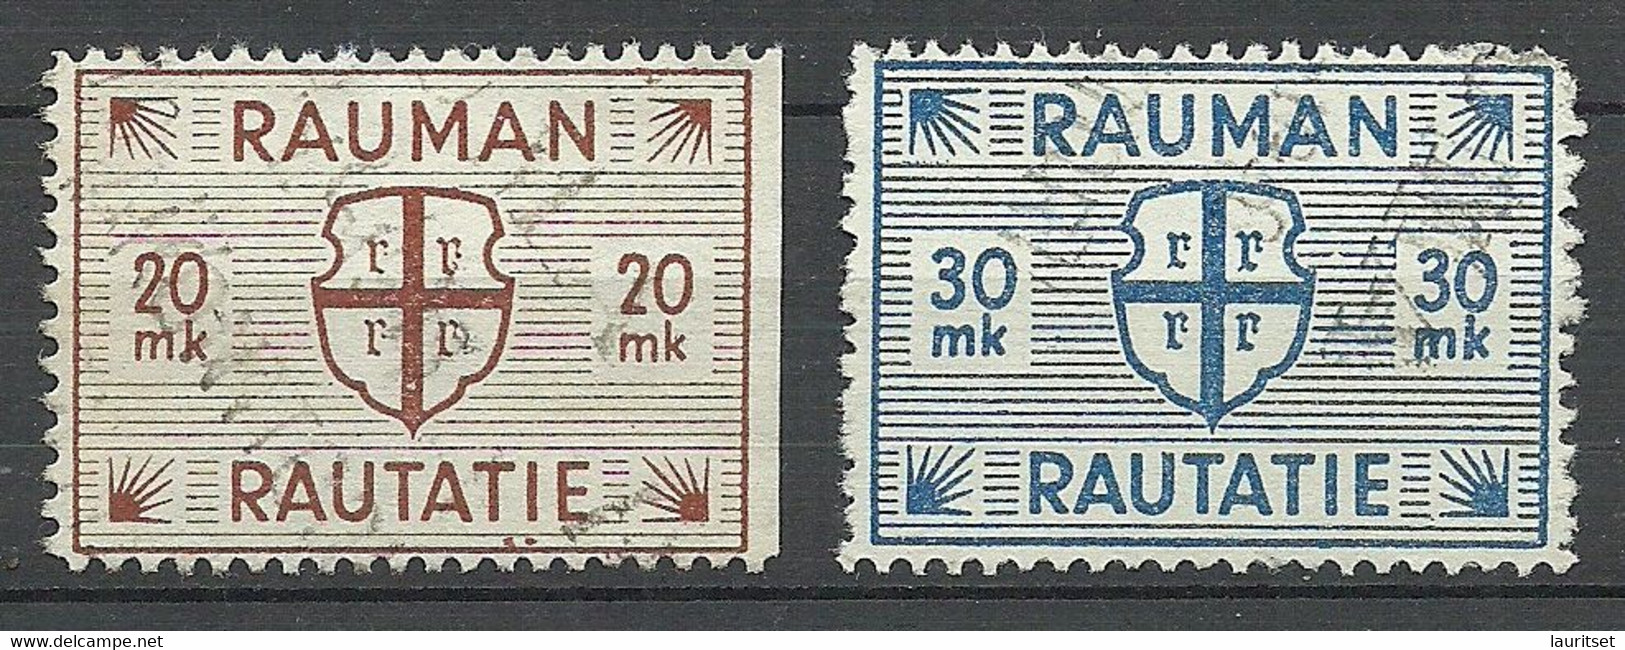 FINLAND FINNLAND 1945 RAUMA Railway Stamps 20 & 30 MK O - Parcel Post